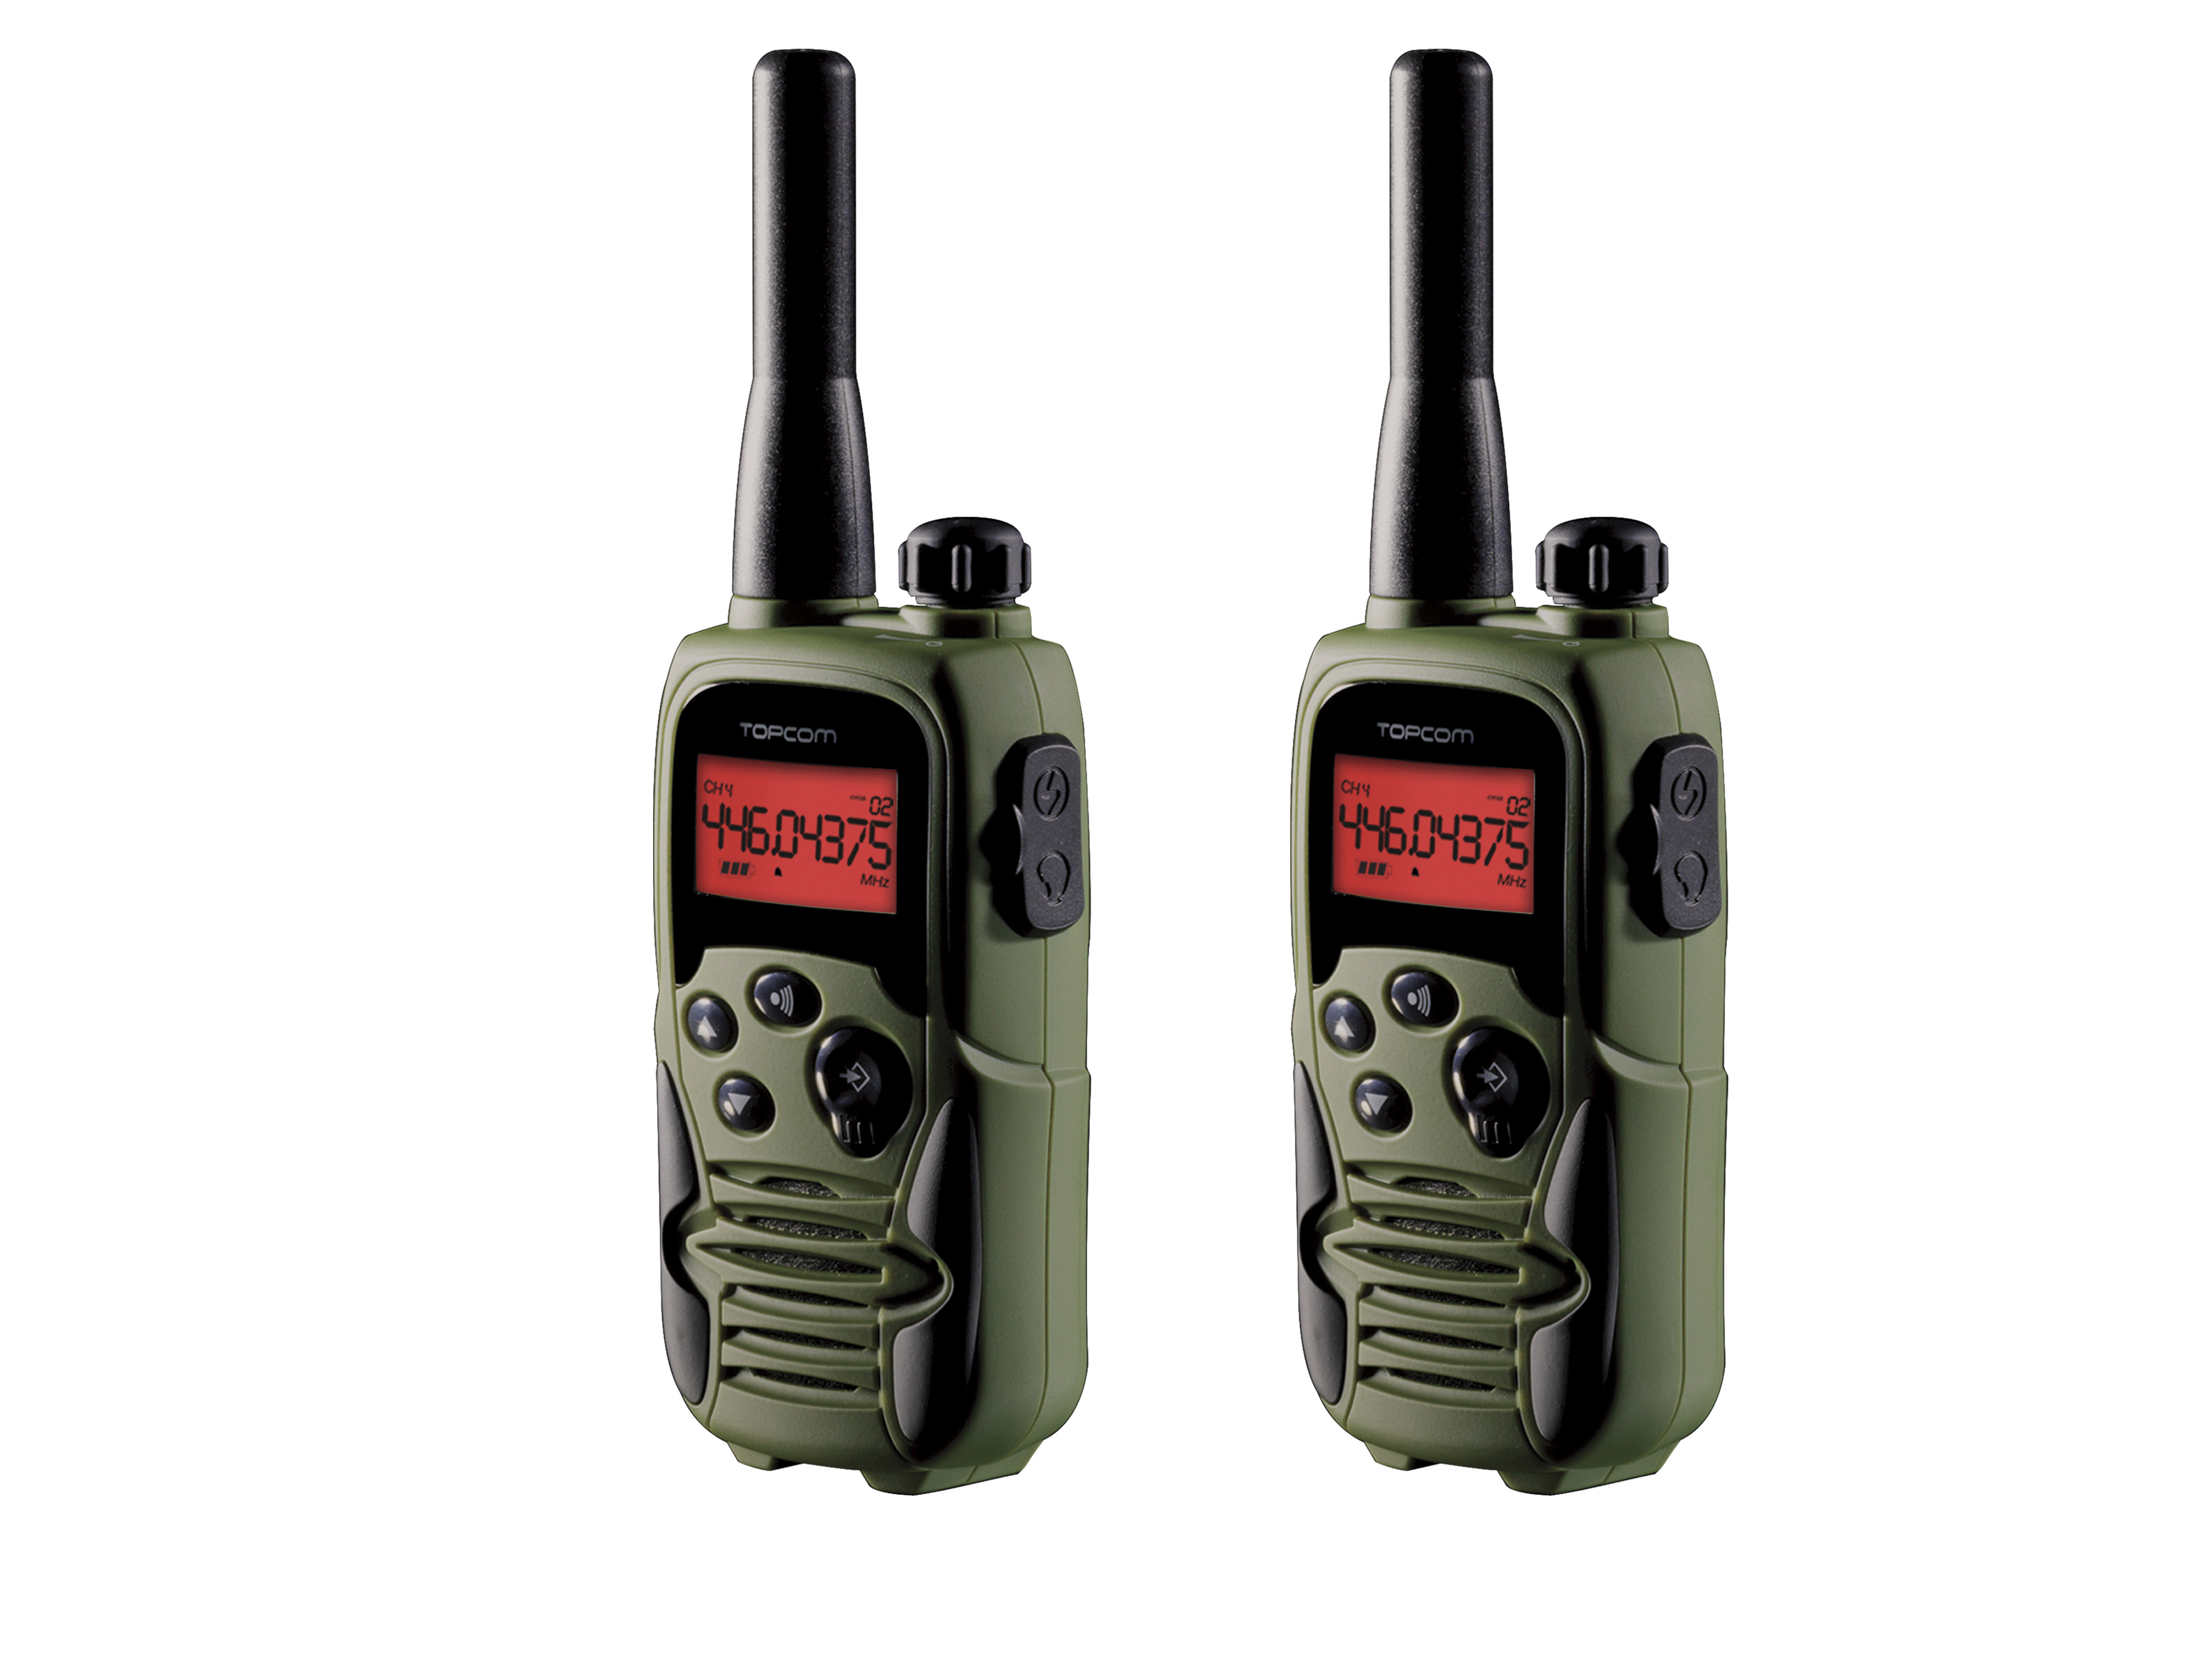 Рация сайт производителя. Рация (радиостанция) Baofeng UV-5r 5w, зеленая. Портативная радиостанция DMR п450. Рация d628. Рация Walkie Talkie 2659.